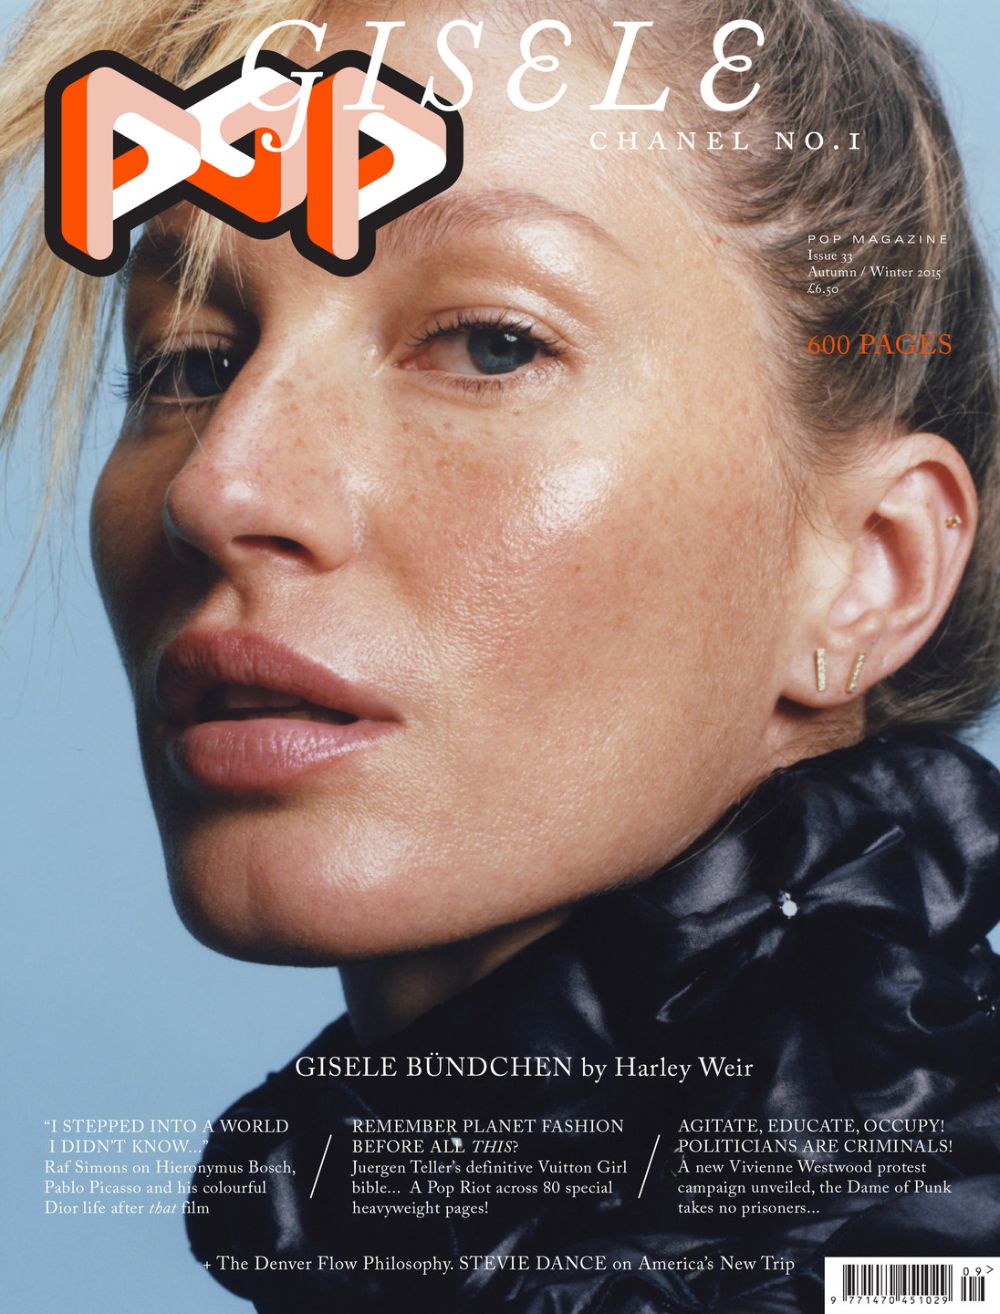 Gisele Bundchen Covers Pop Magazine Fall-Winter 2015